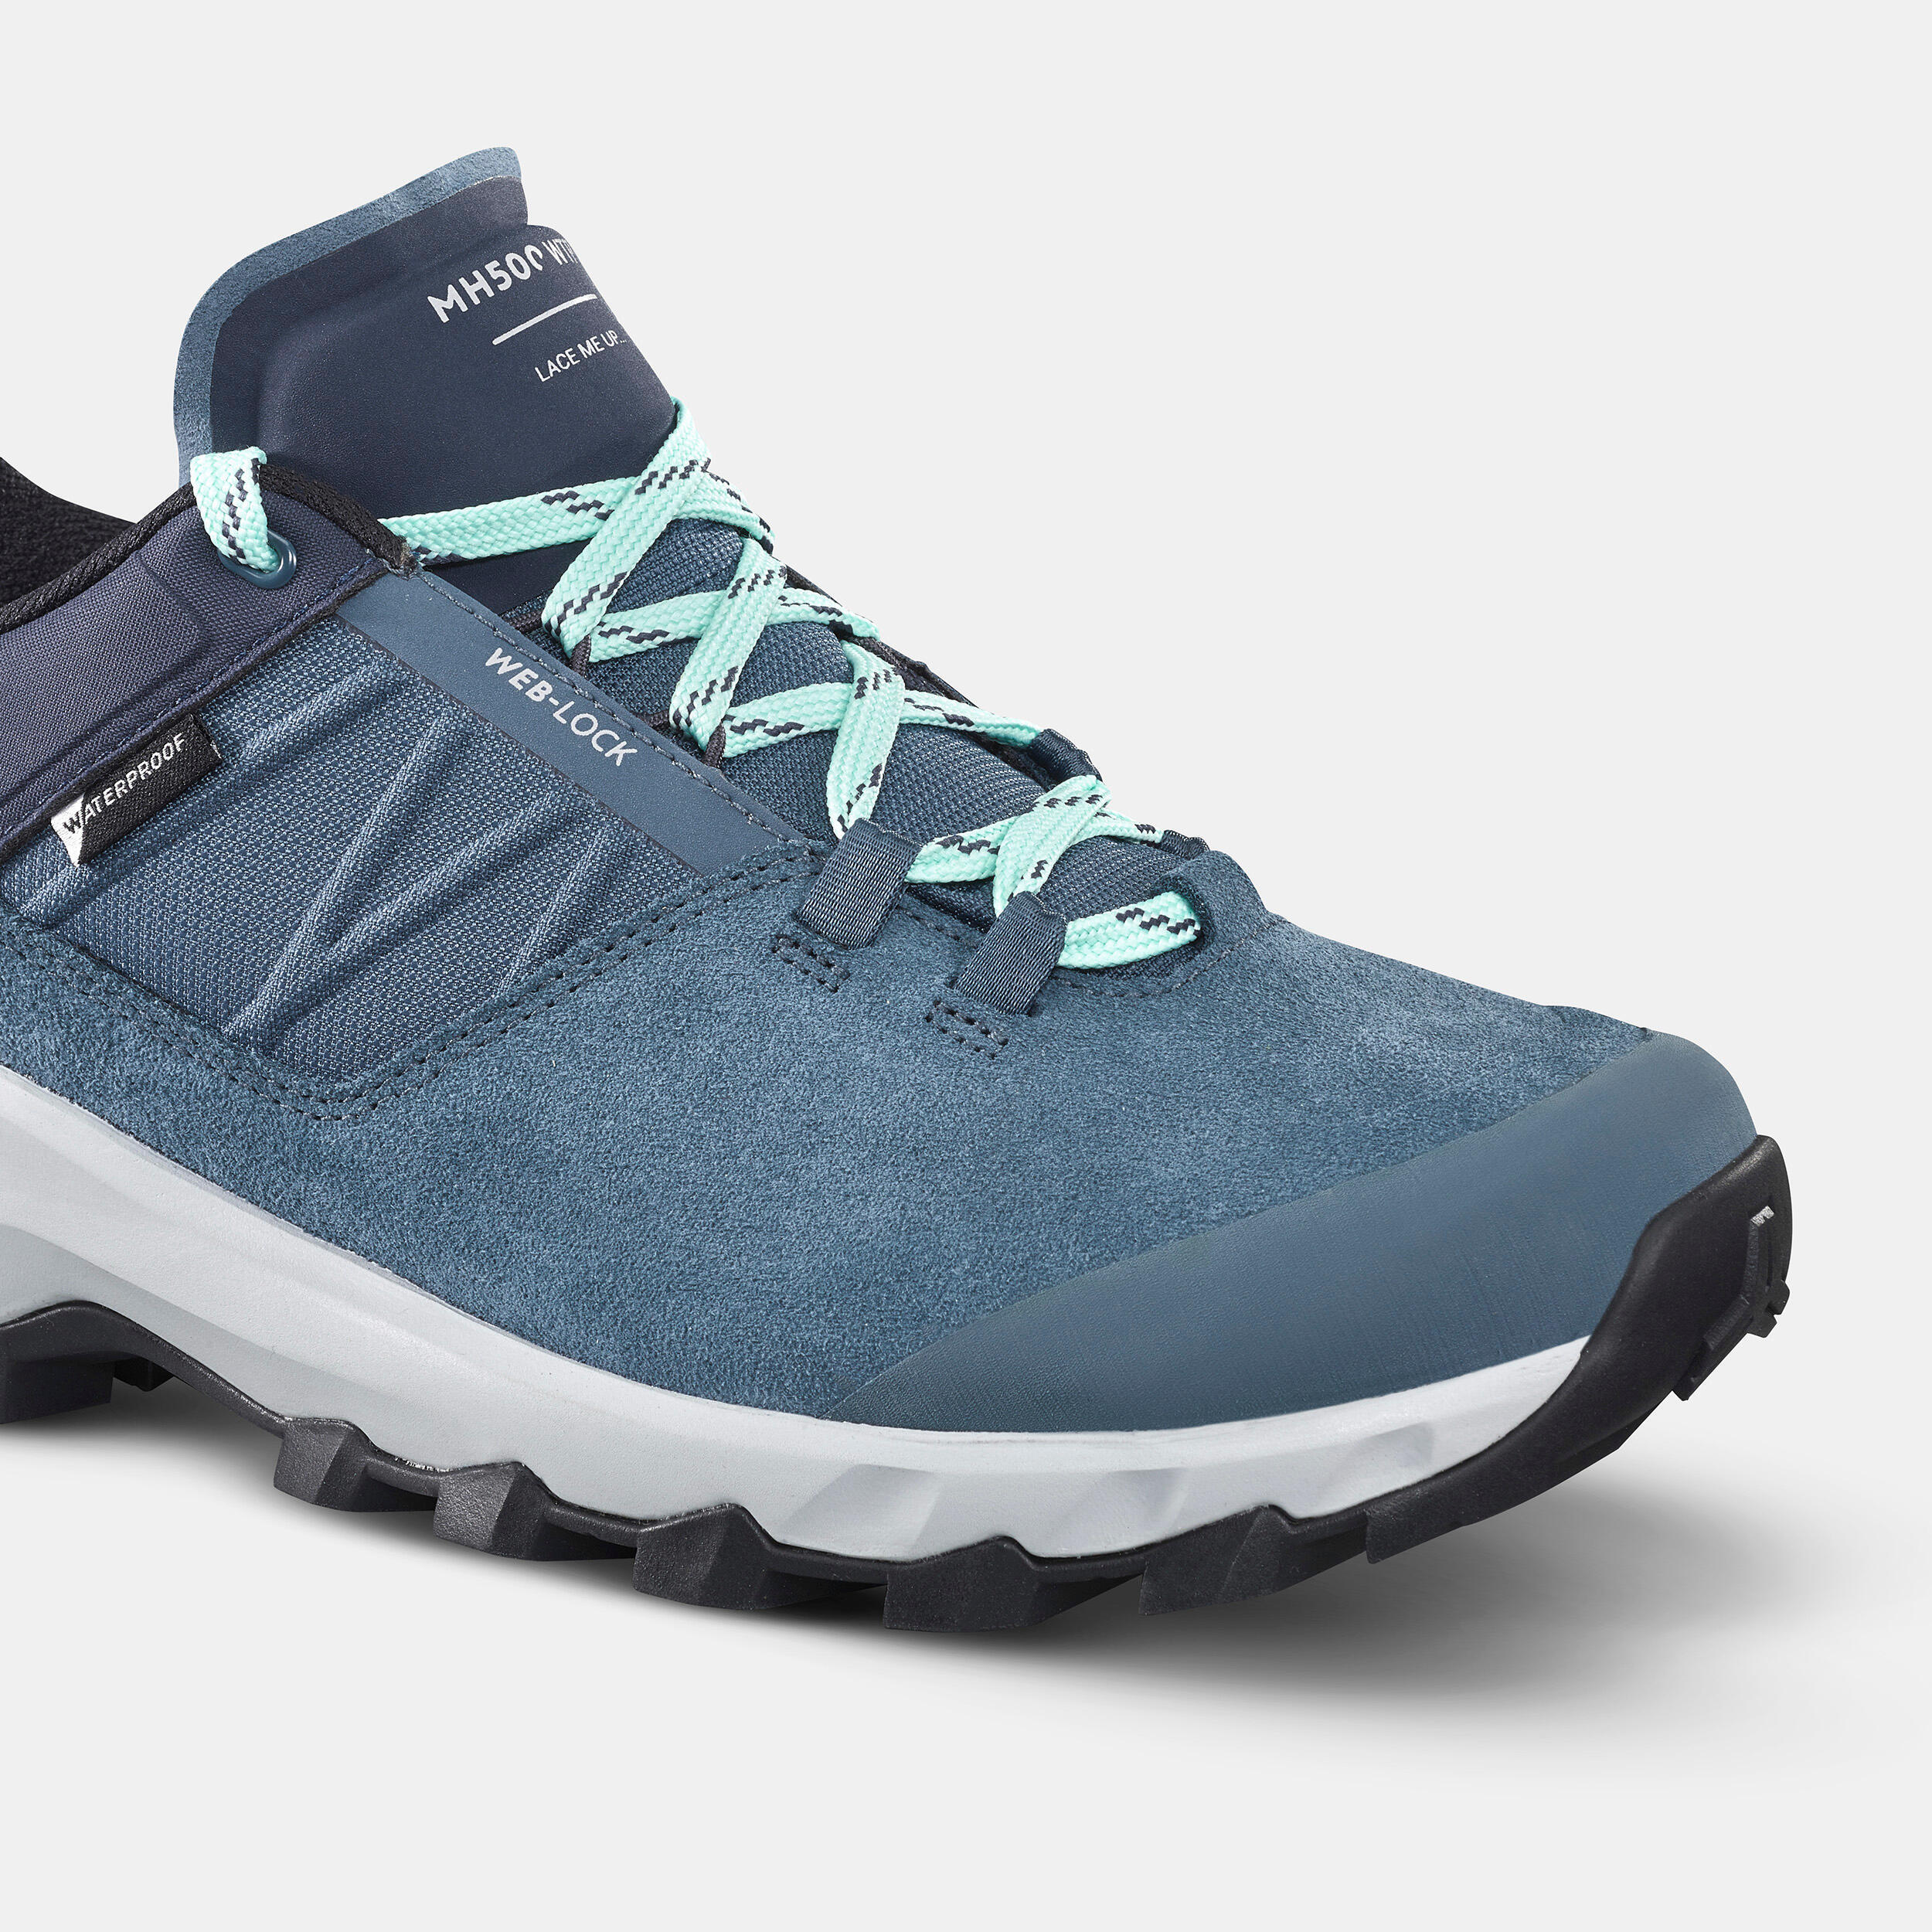 Women’s Waterproof Mountain Walking Shoes - MH500 Blue 6/9